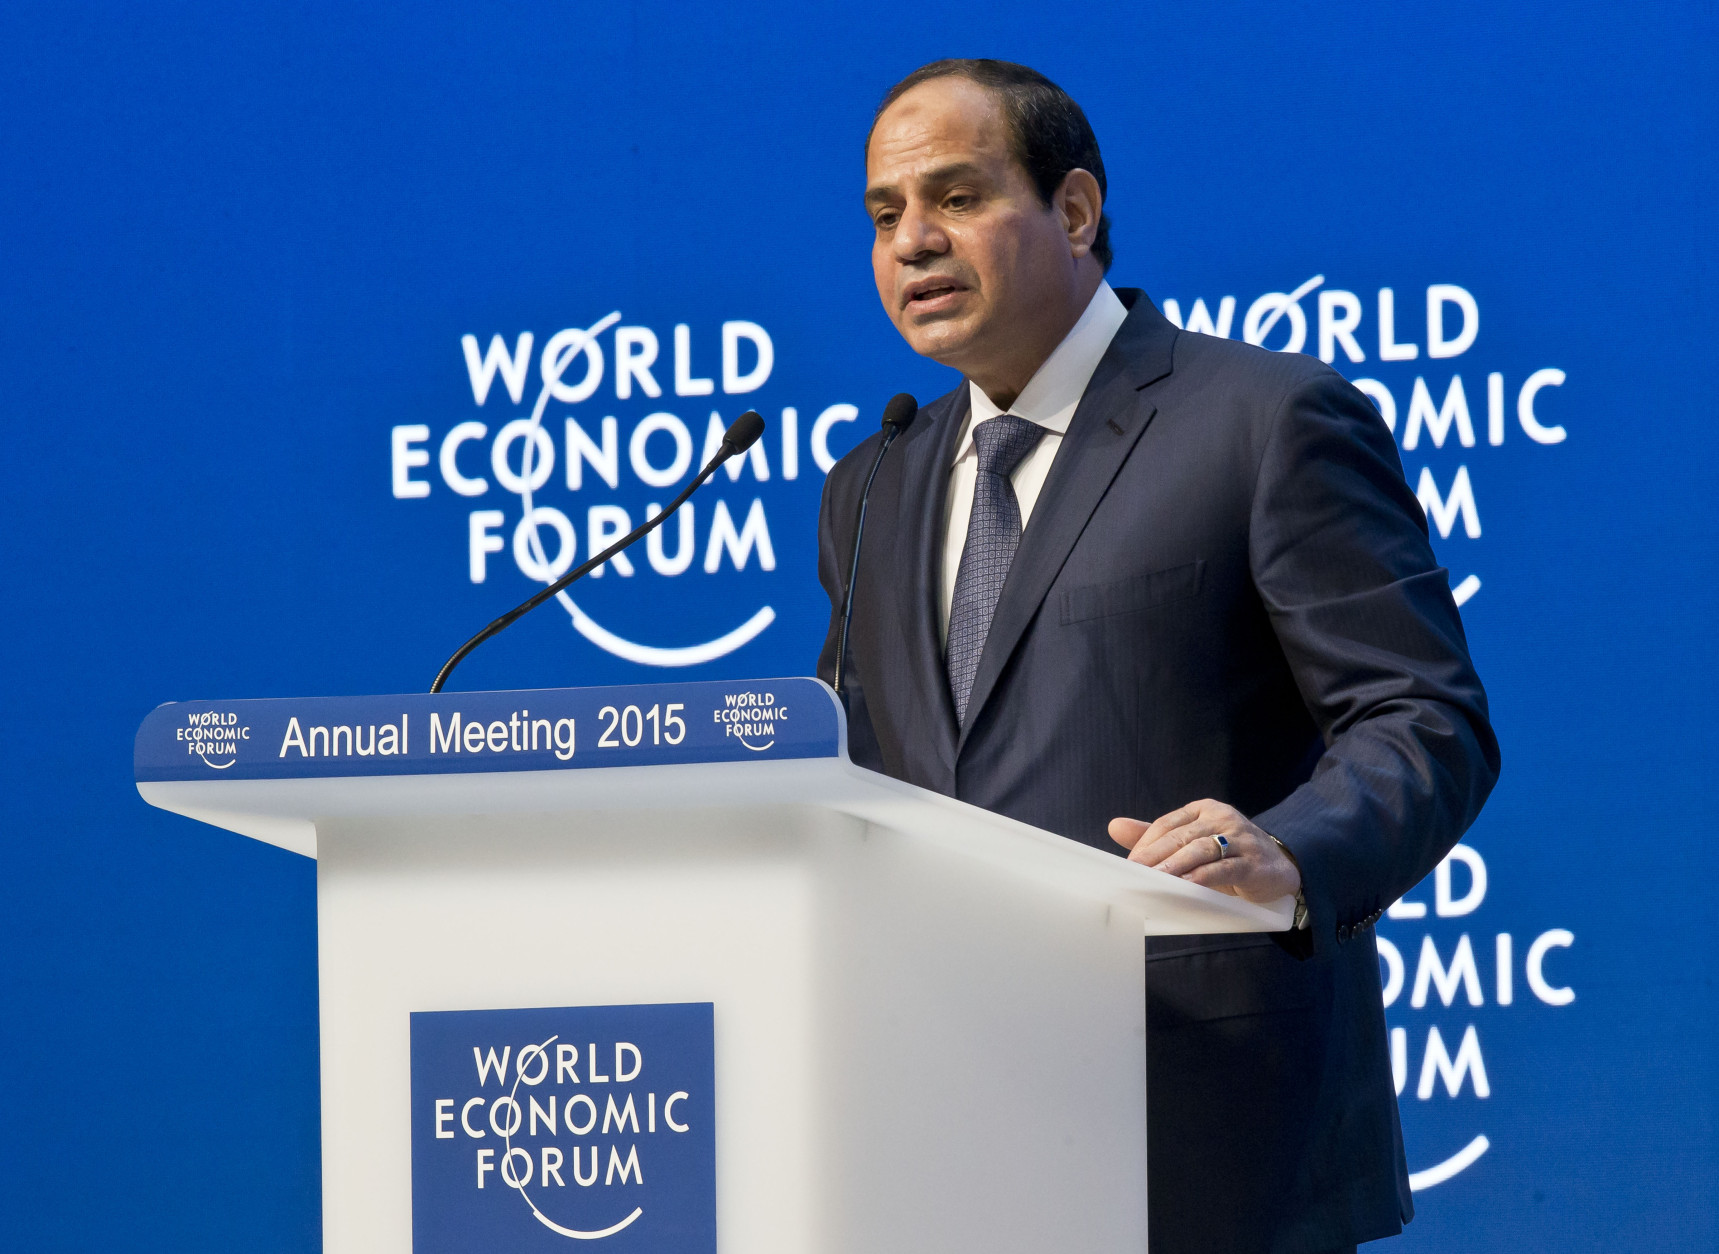 Egyptian President Abdel-Fattah El-Sisi speaking during the panel "Egypt in the World" at the World Economic Forum in Davos, Switzerland, Thursday, Jan. 22, 2015. (AP Photo/Michel Euler)